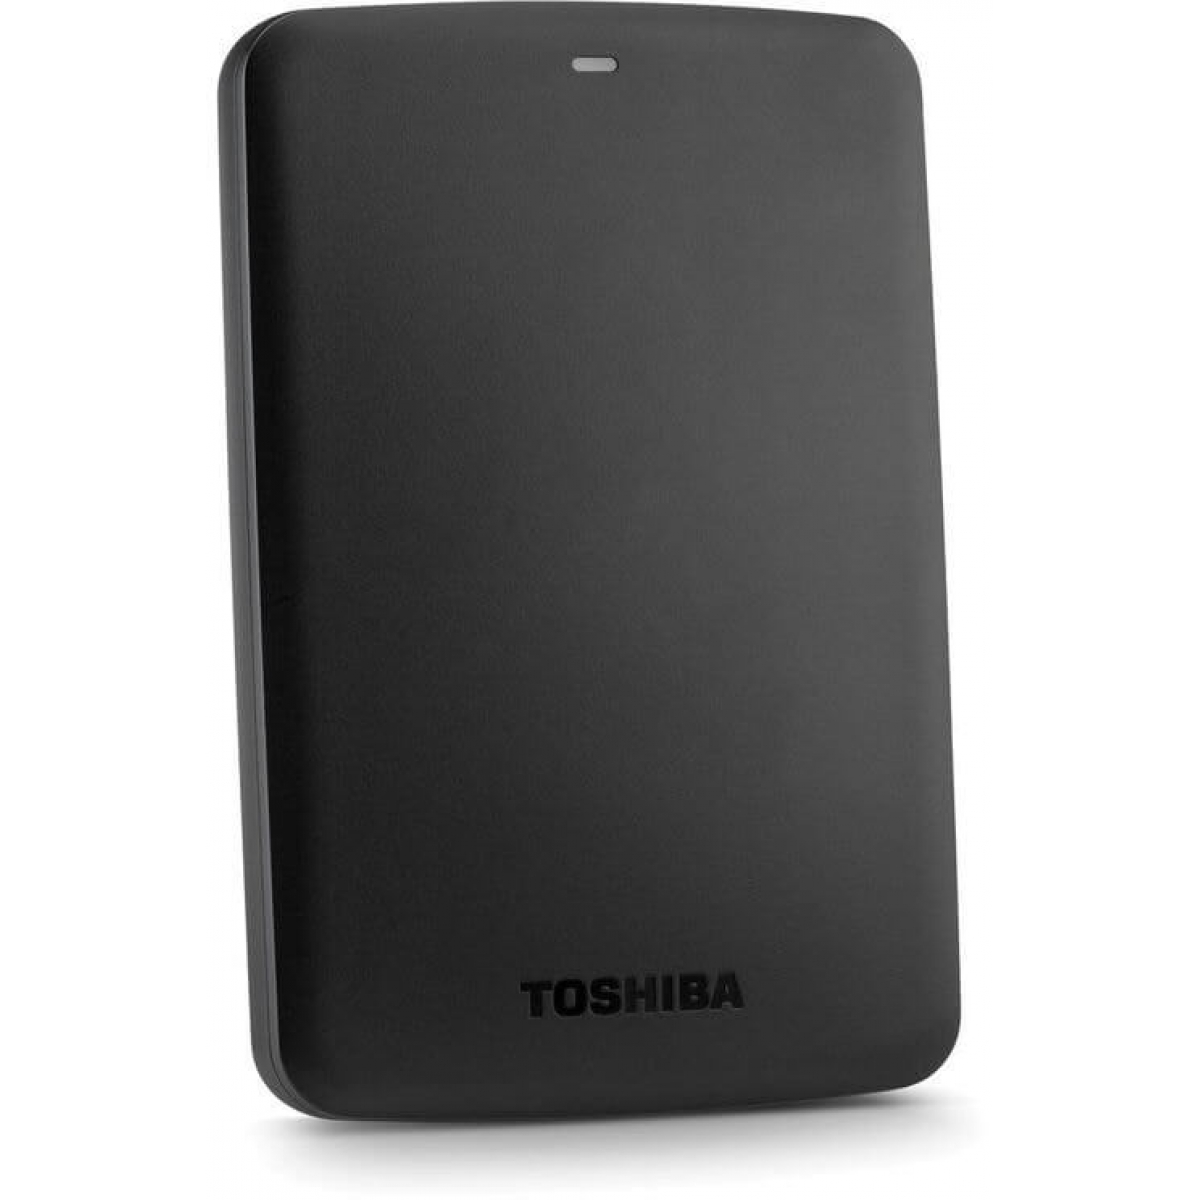 HD Externo PORTÁTIL Toshiba CANVIO BASICS 500GB USB 3.0